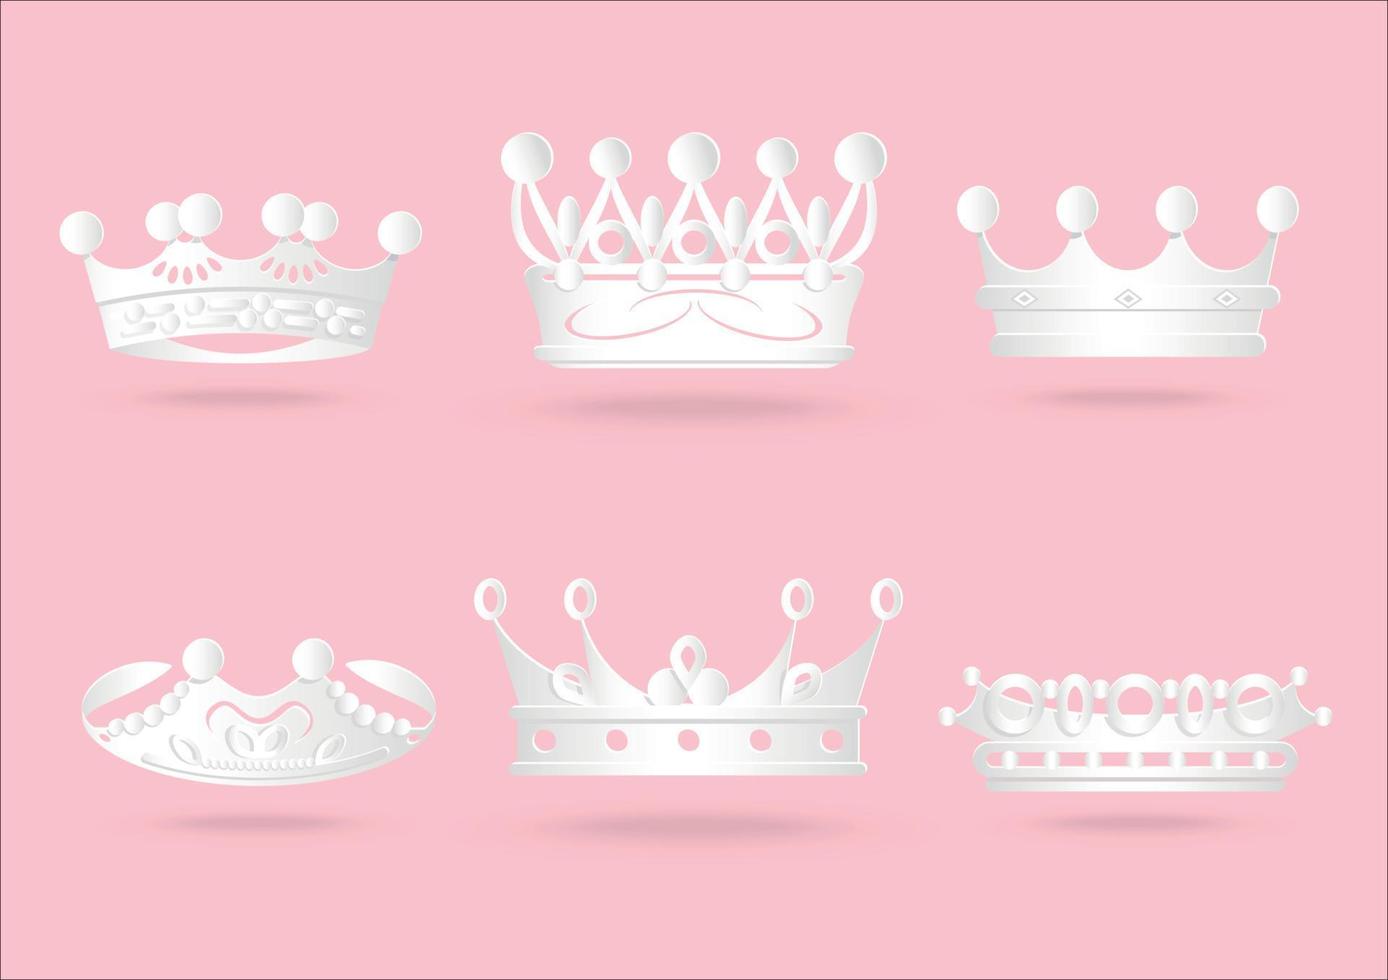 coroa real rainha papel branco cortado no vetor pastel rosa de fundo.